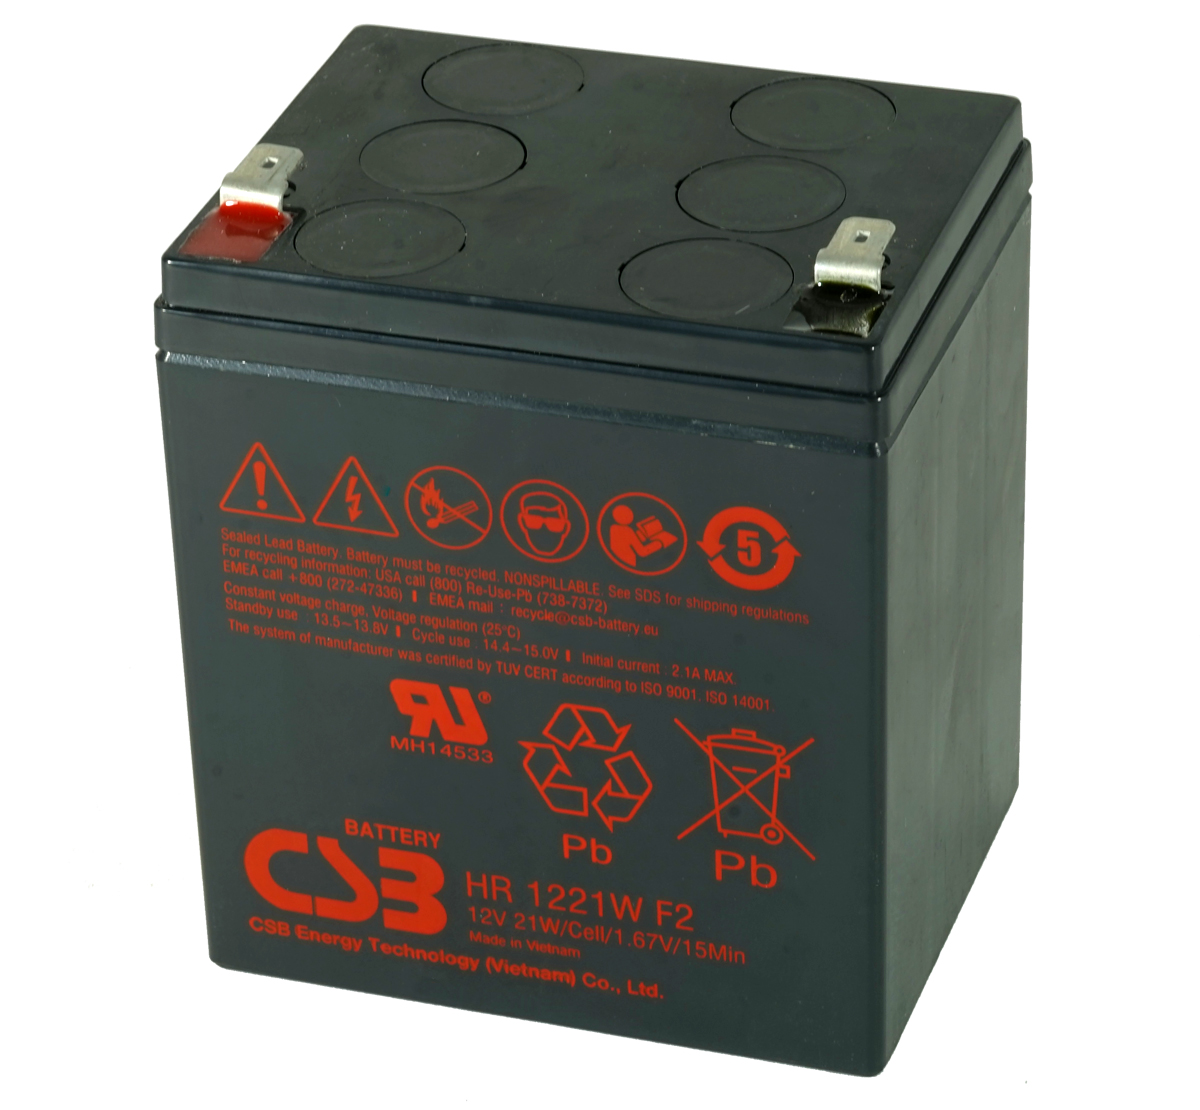 MDSV211 UPS Battery Kit - Replaces APC RBCV211